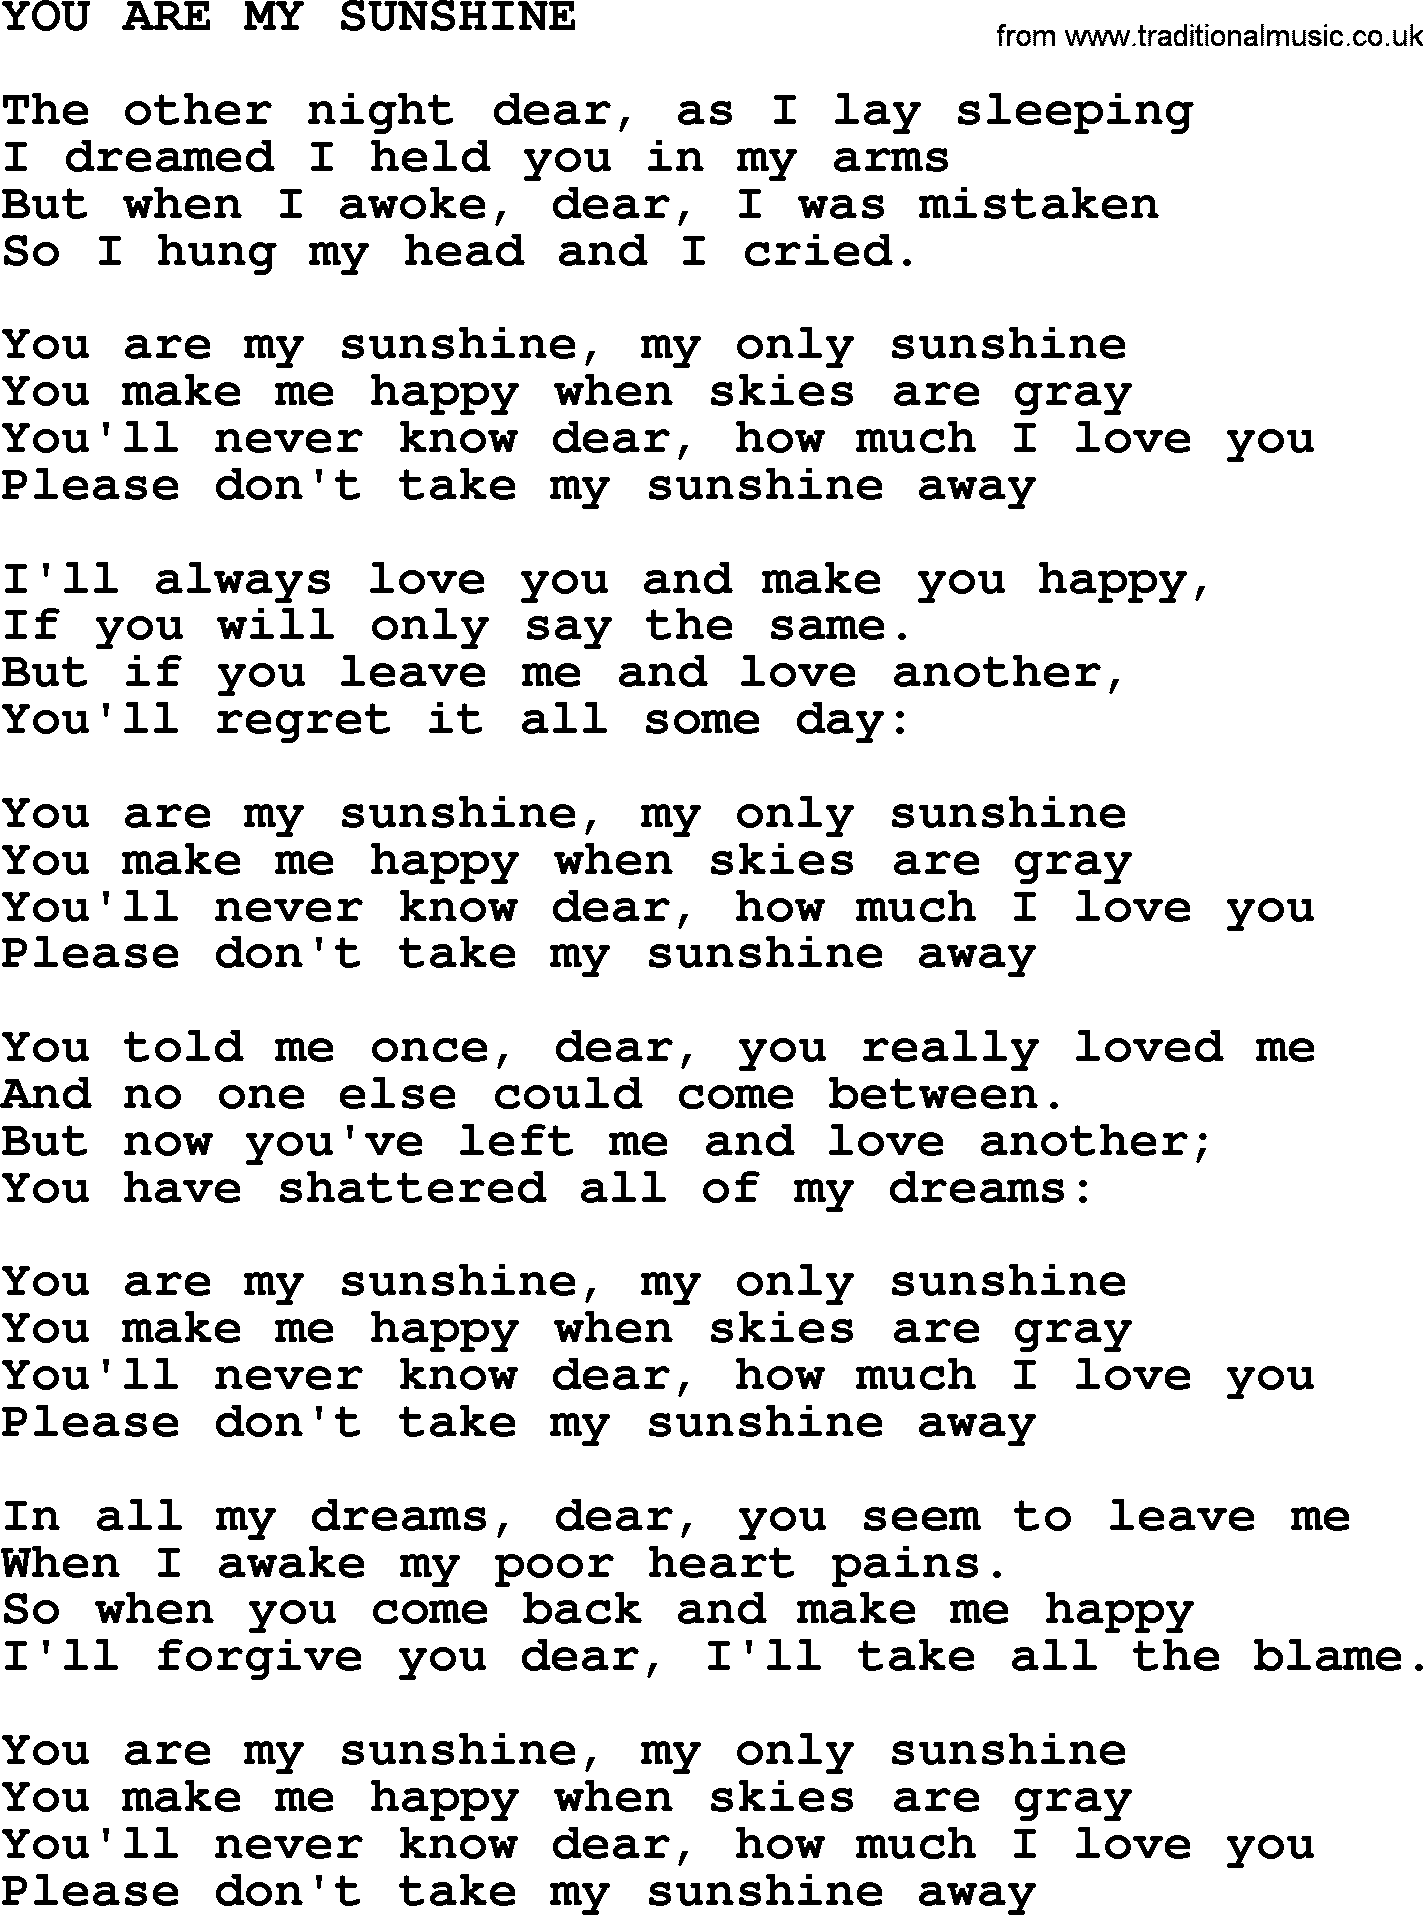 Johnny Cash song You Are My Sunshine.txt lyrics